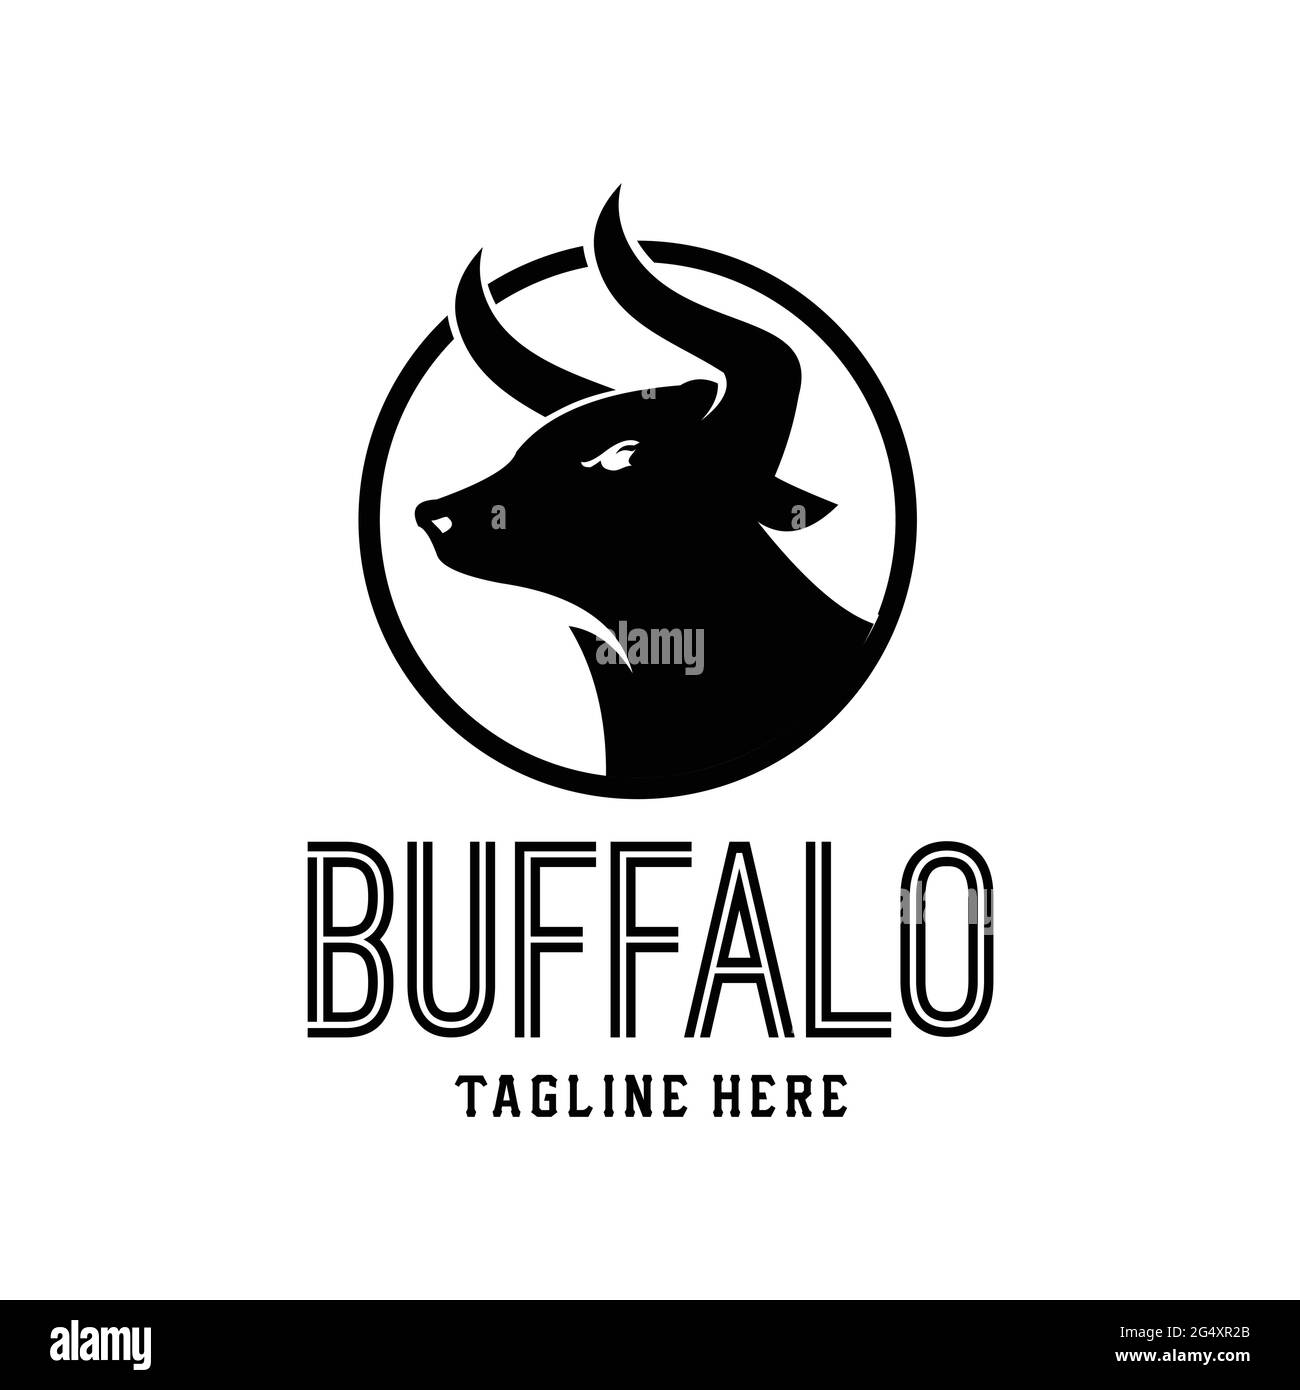 logo buffalo inspiré du design exclusif Illustration de Vecteur